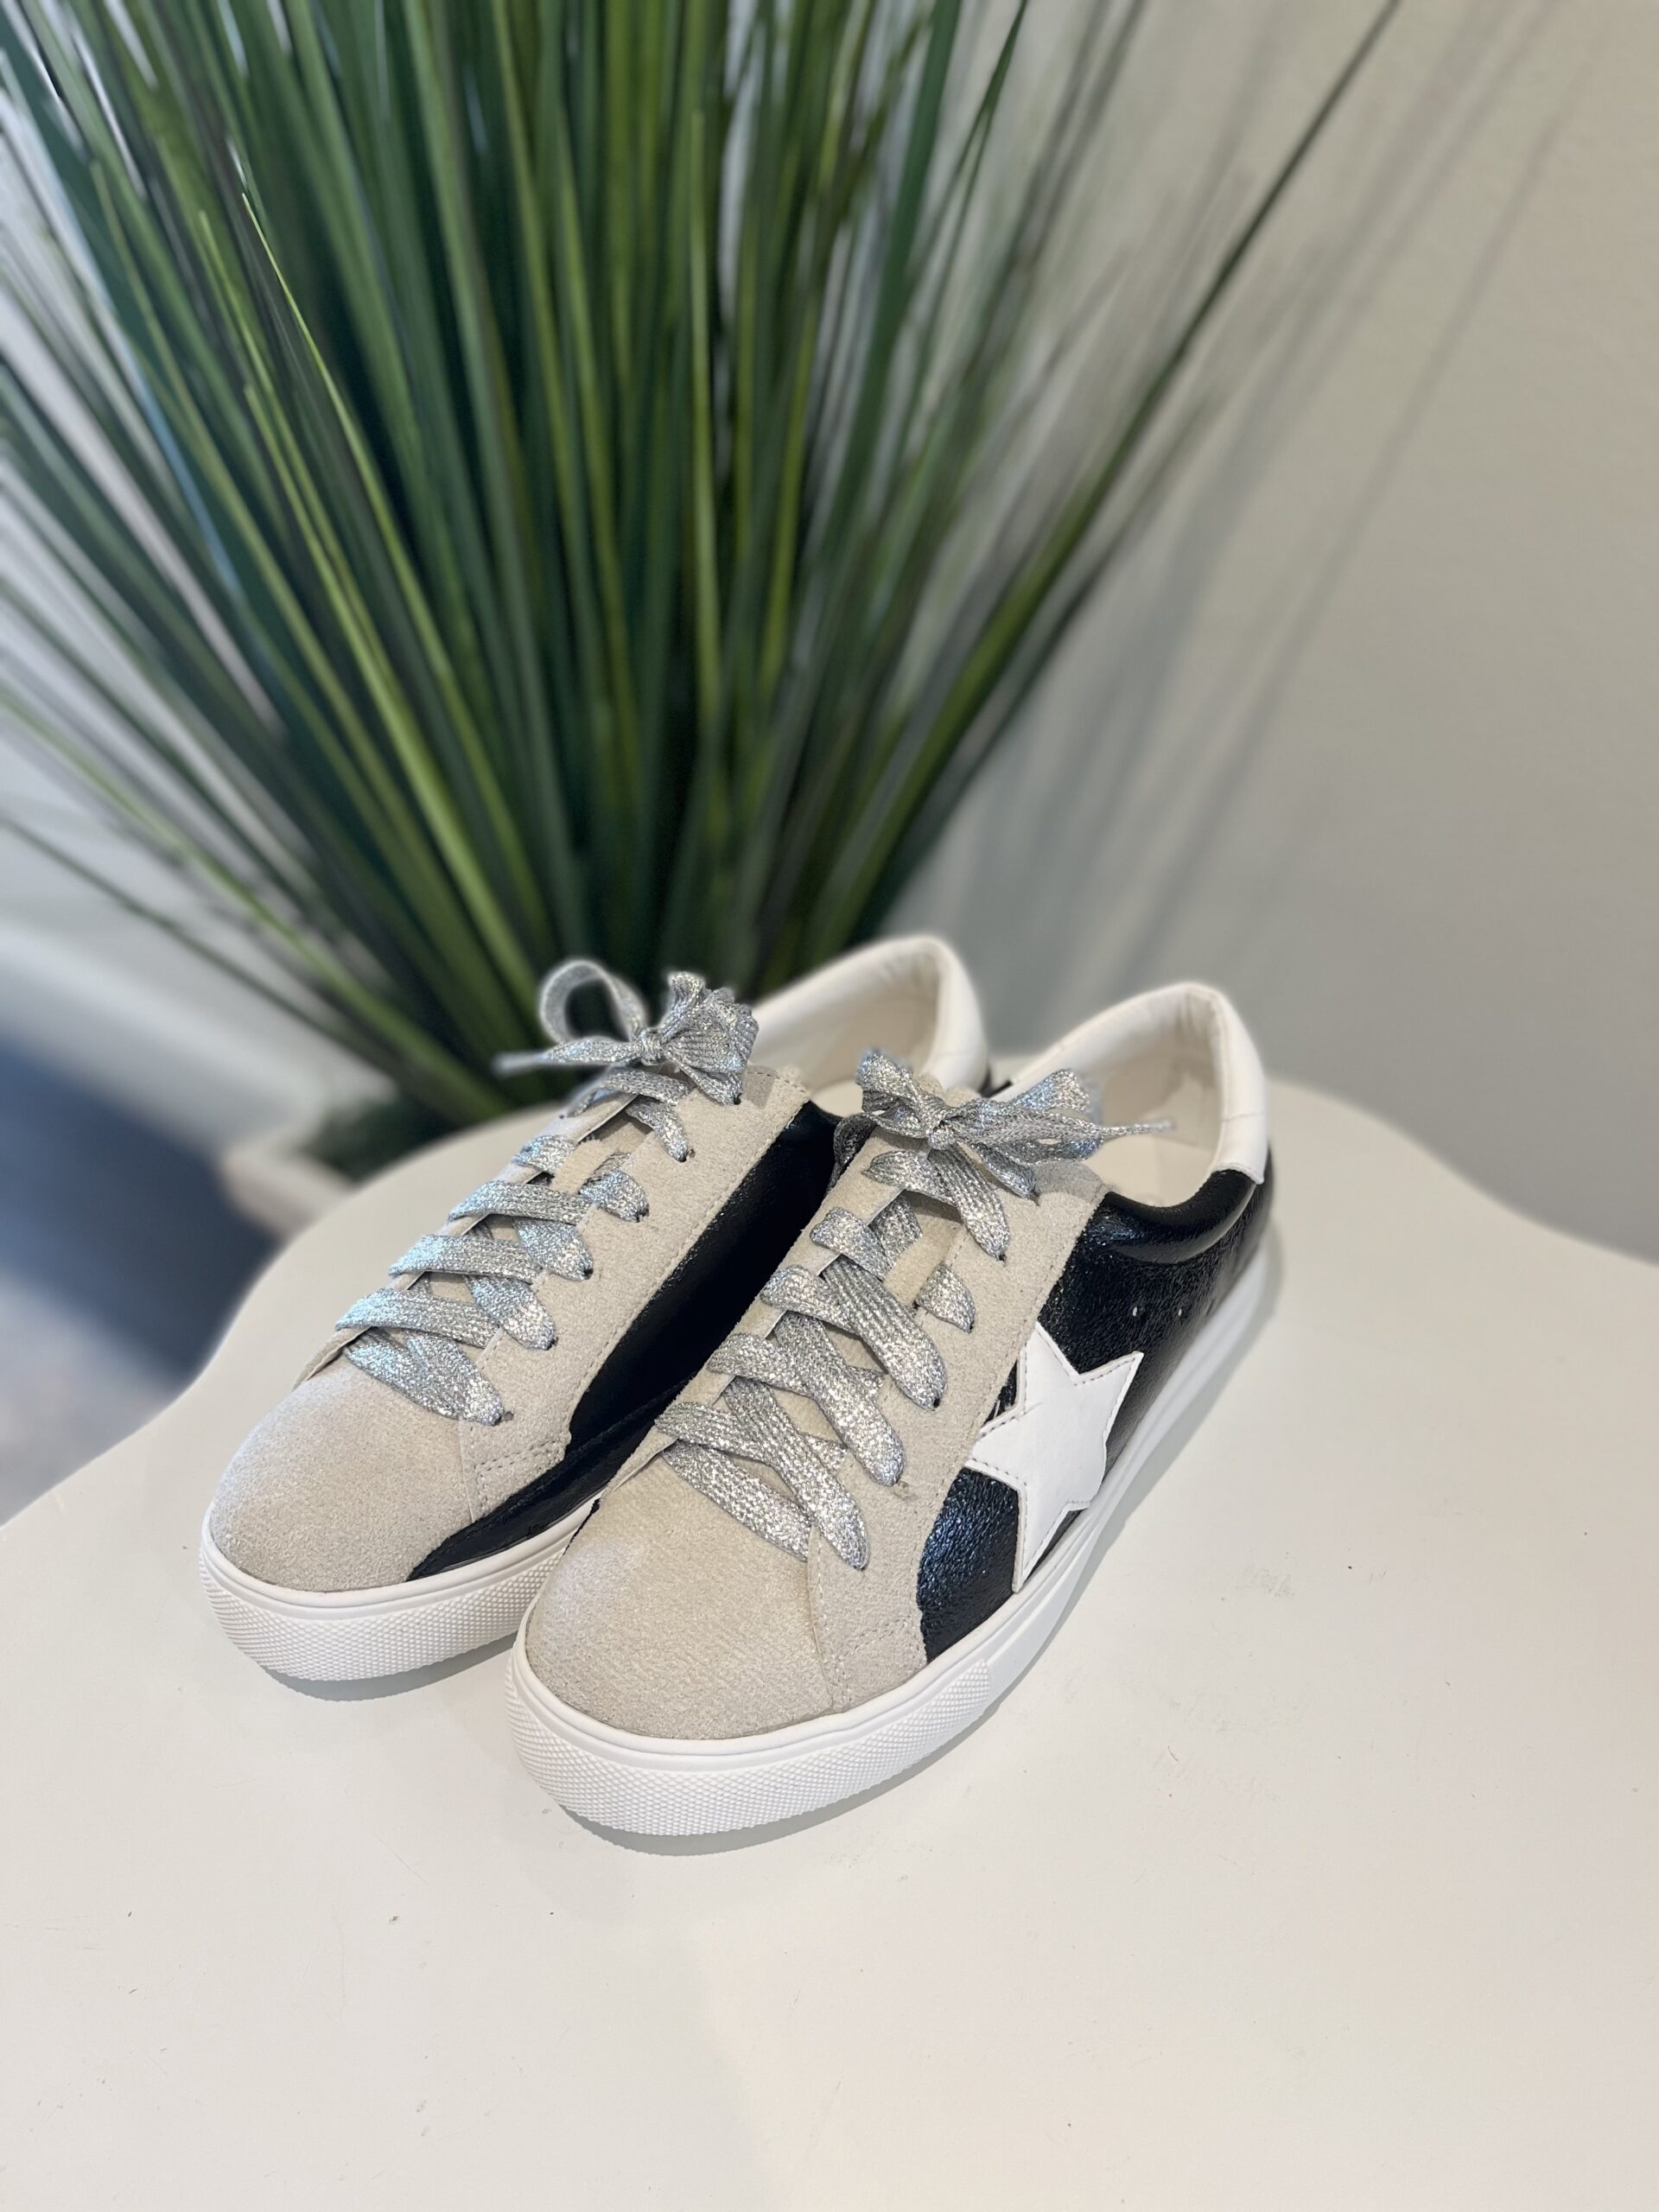 Star Sneakers – On Sale!